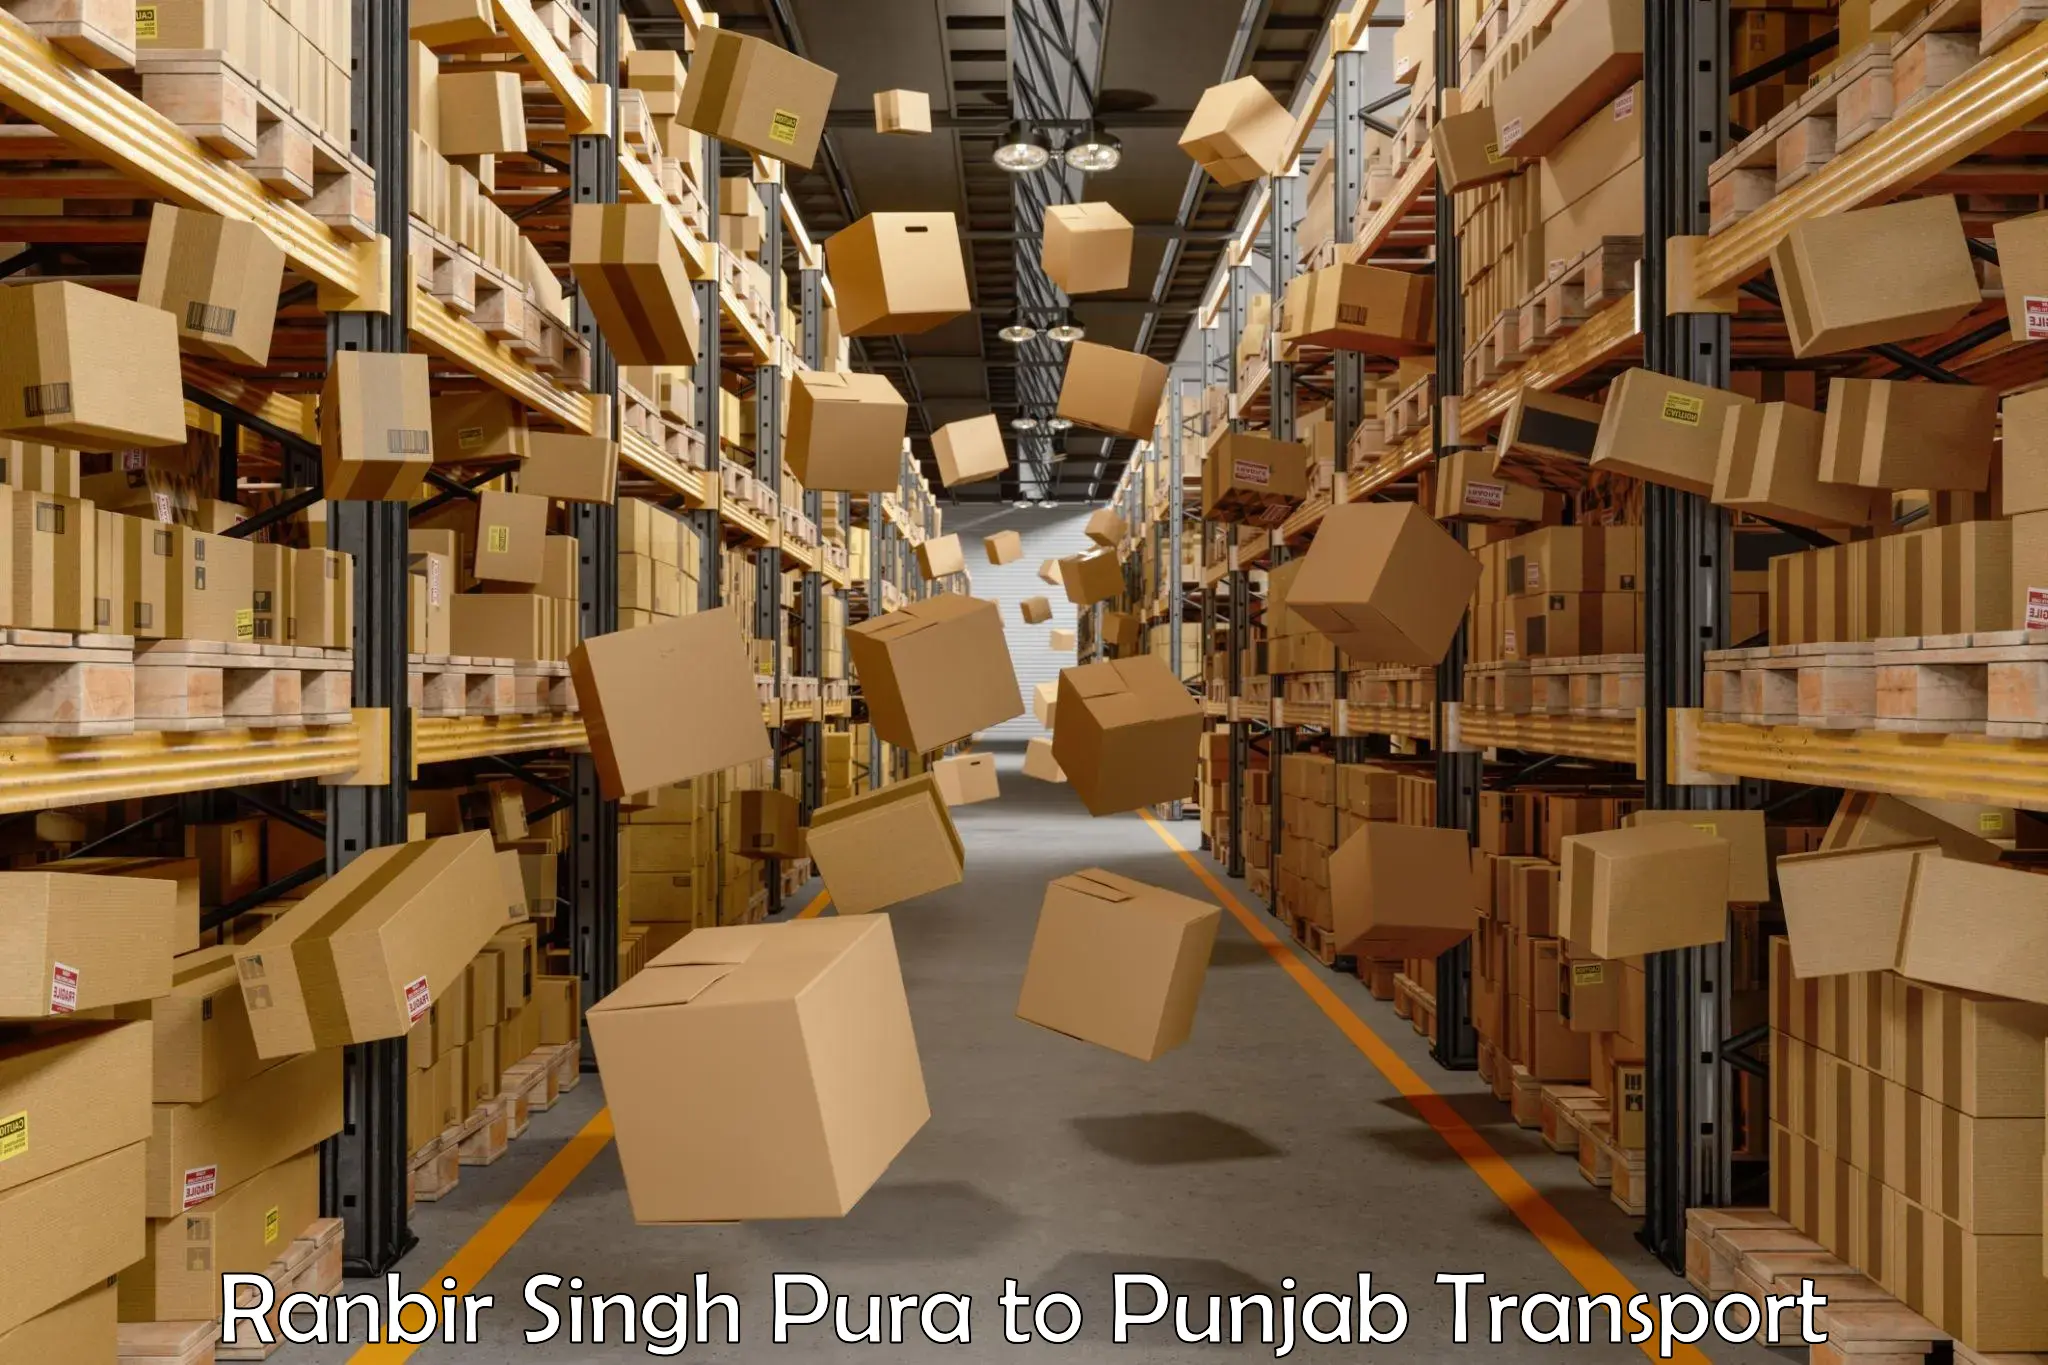 Cycle transportation service Ranbir Singh Pura to Punjab